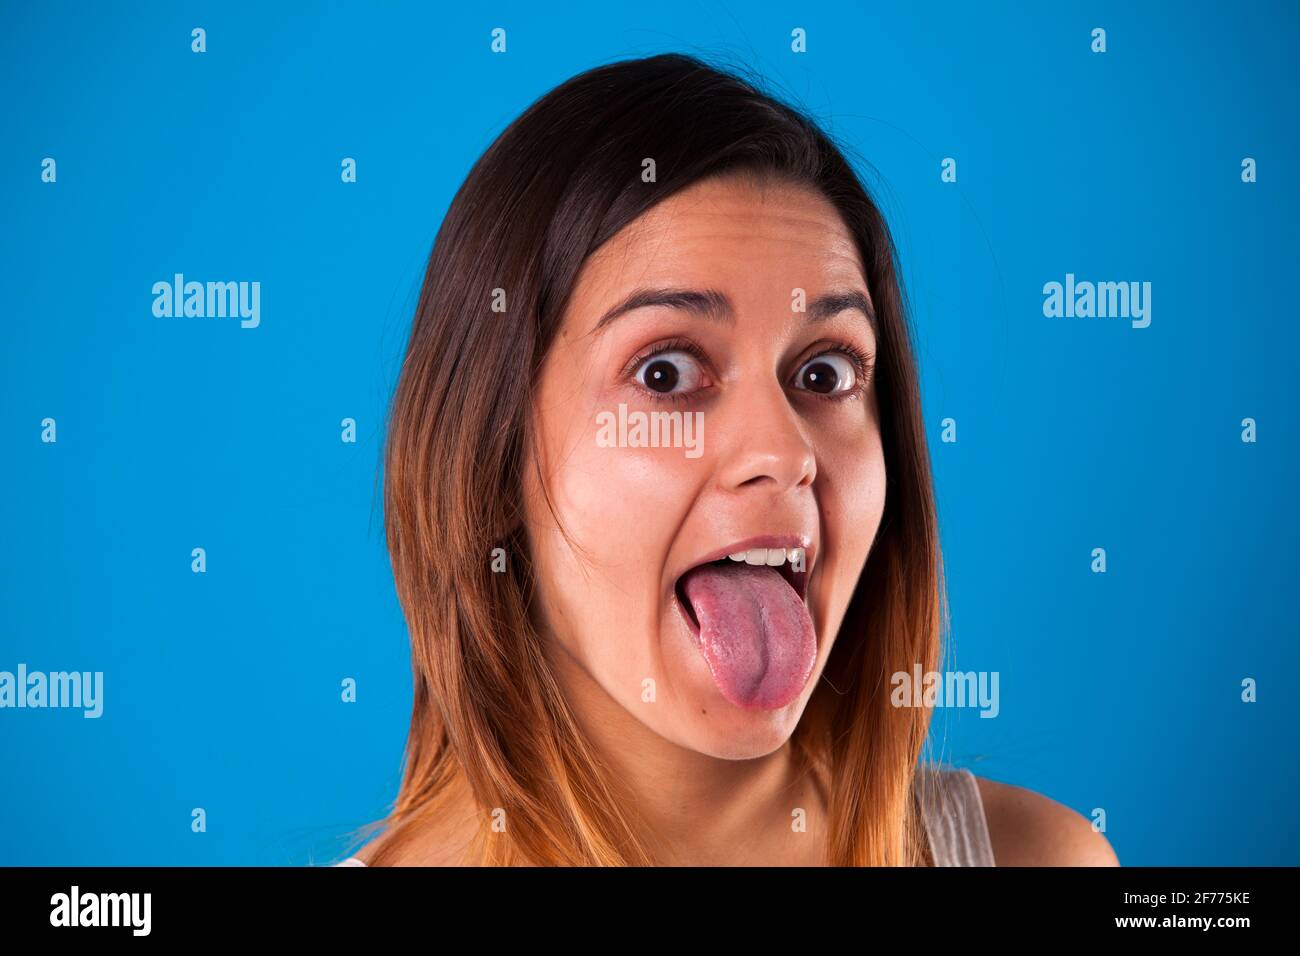 Femme avec la langue dehors avec un fond bleu Banque D'Images